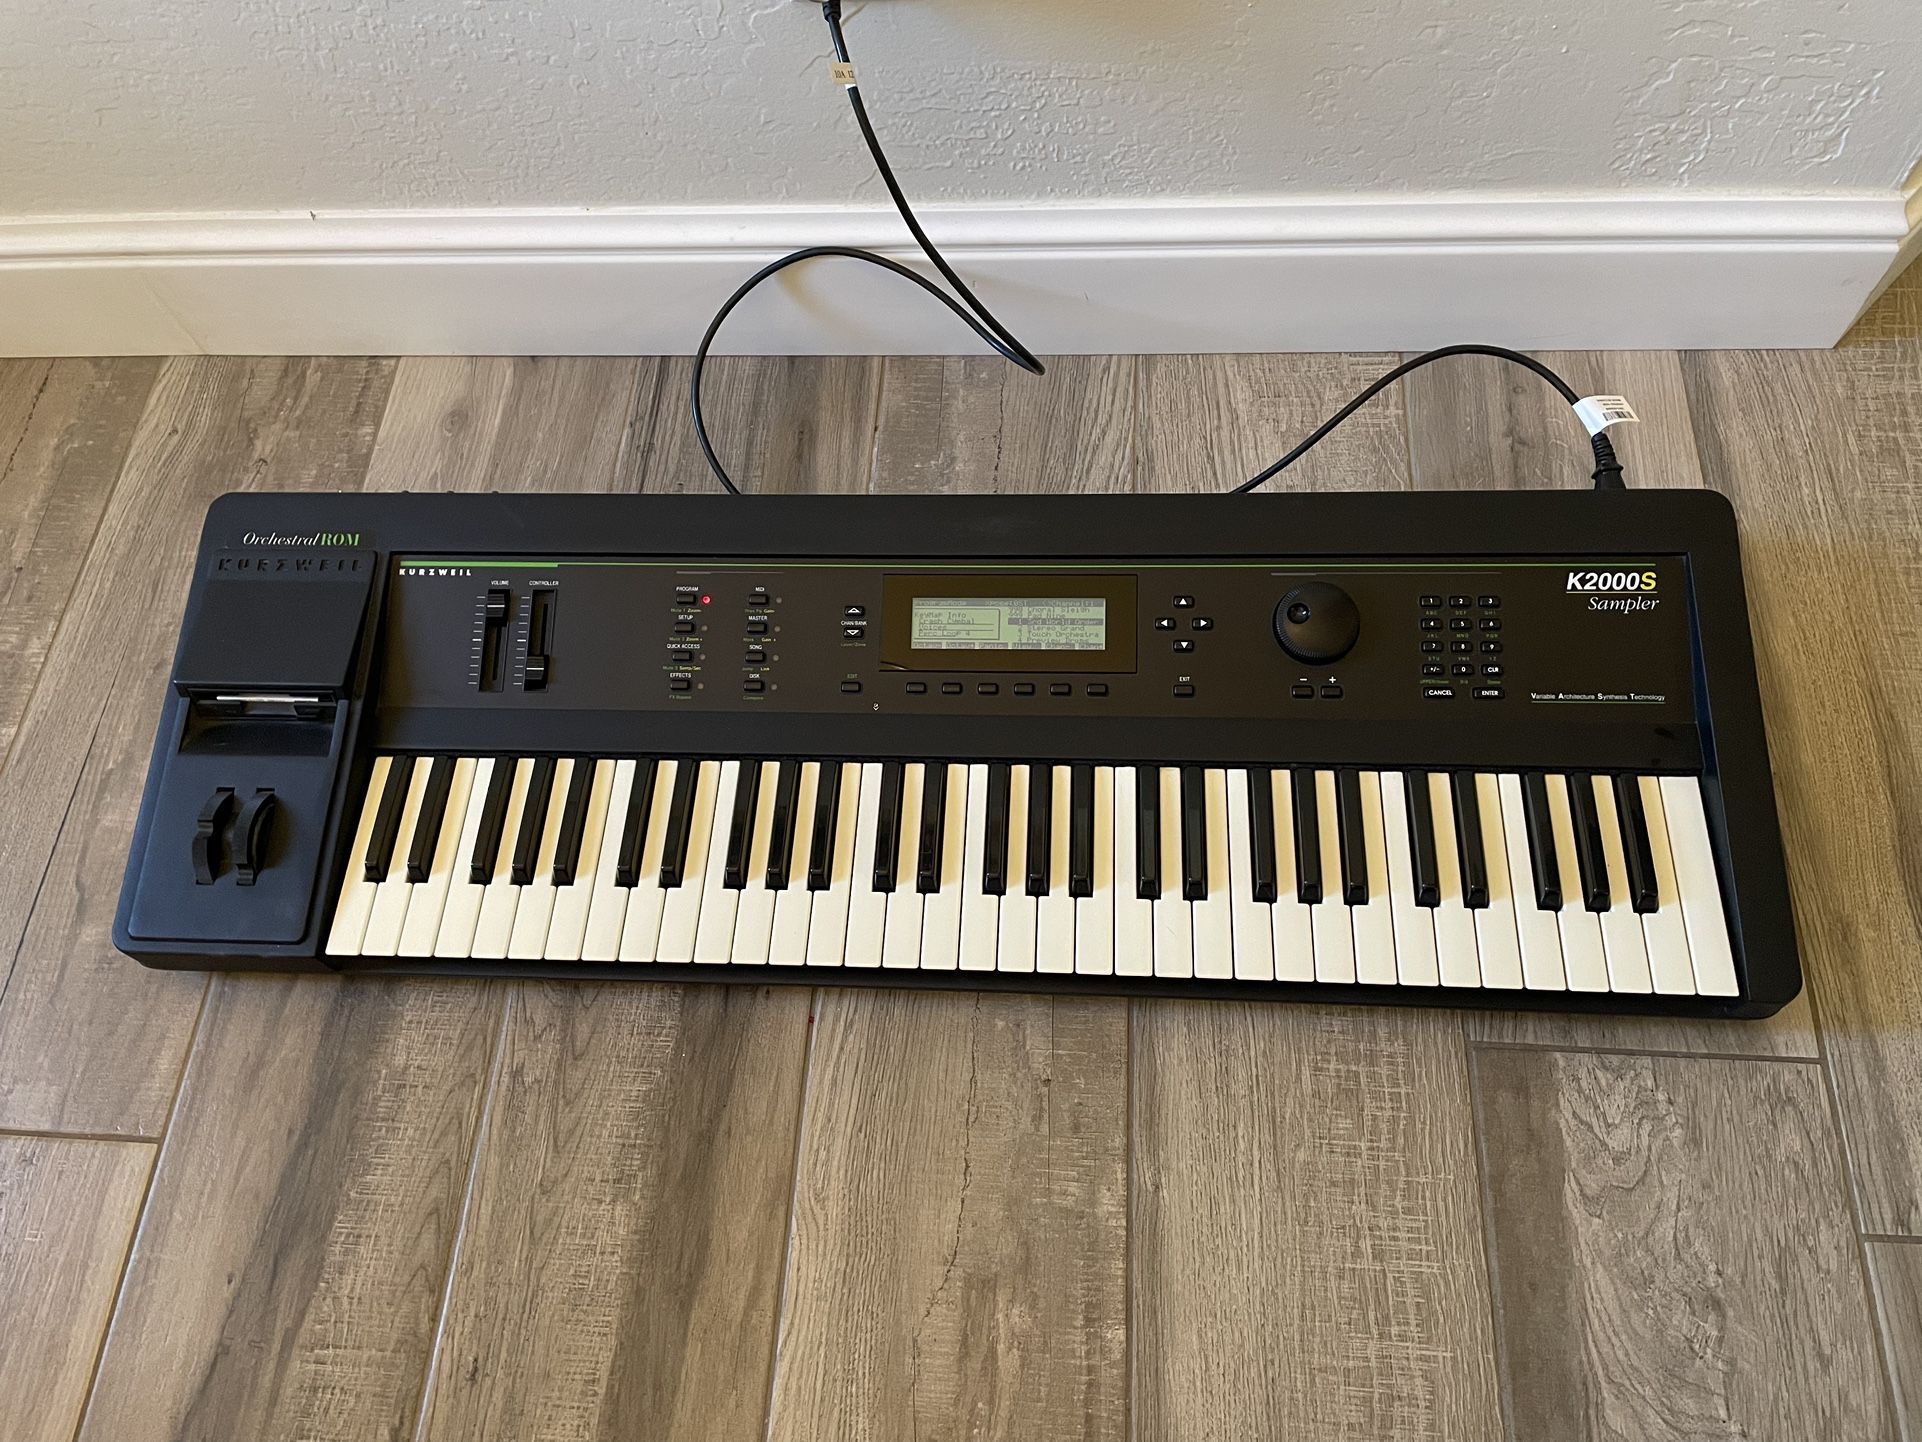 Kurzweil K2000s Sampler Workstation Keyboard